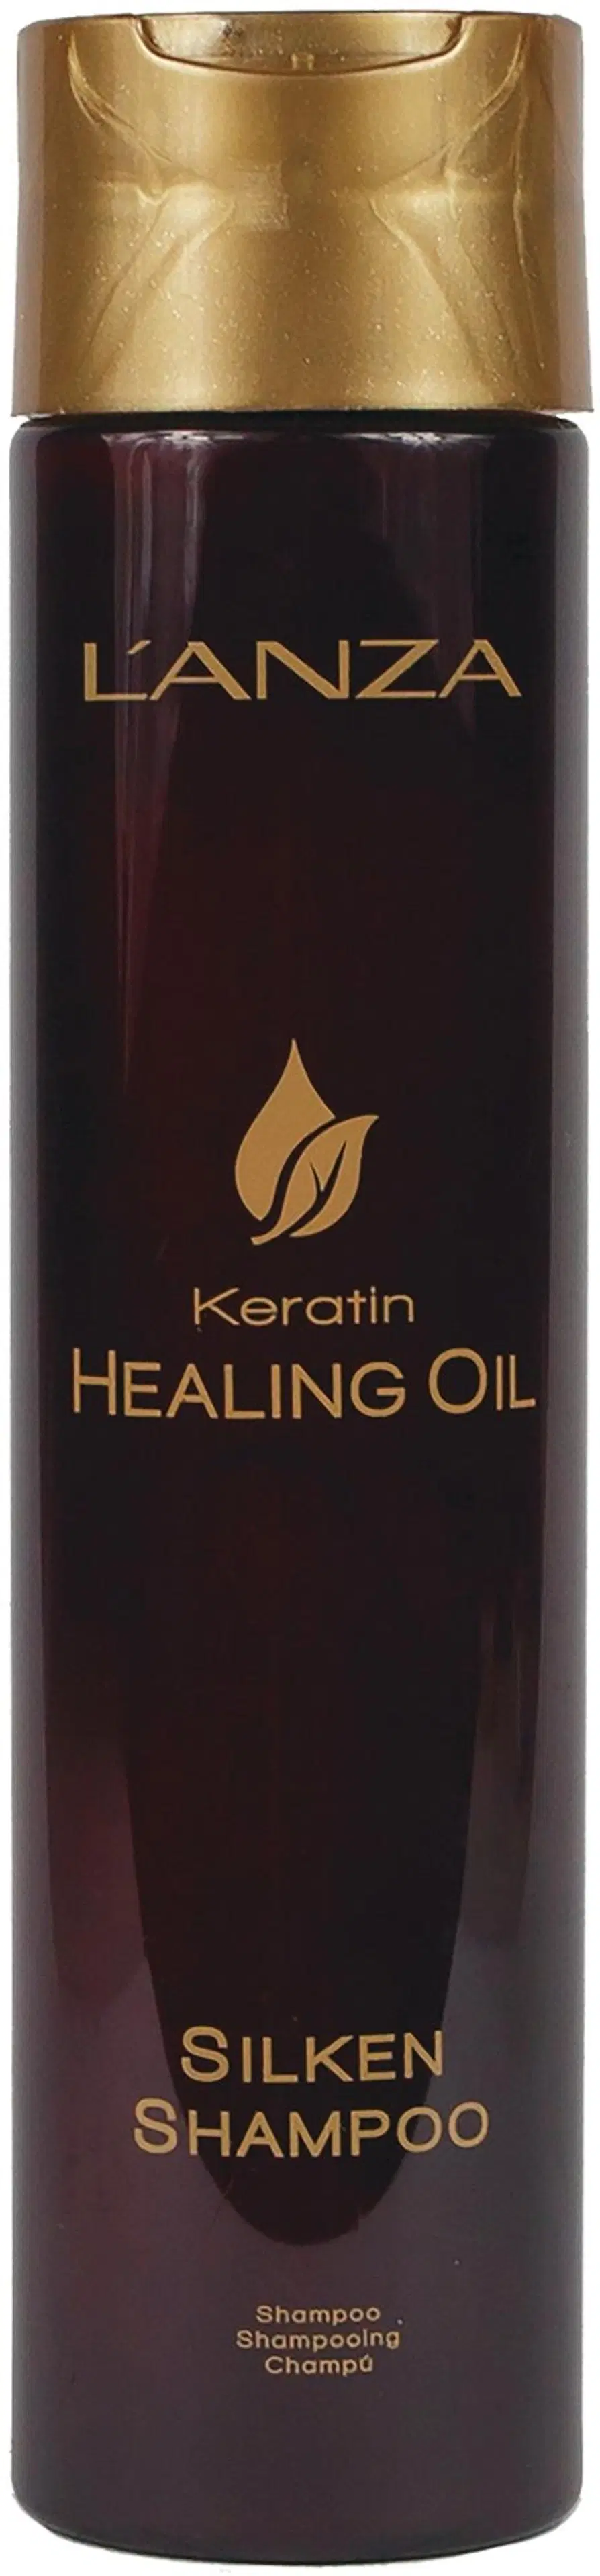 L´ANZA Keratin Healing Oil Silken shampoo 300 ml